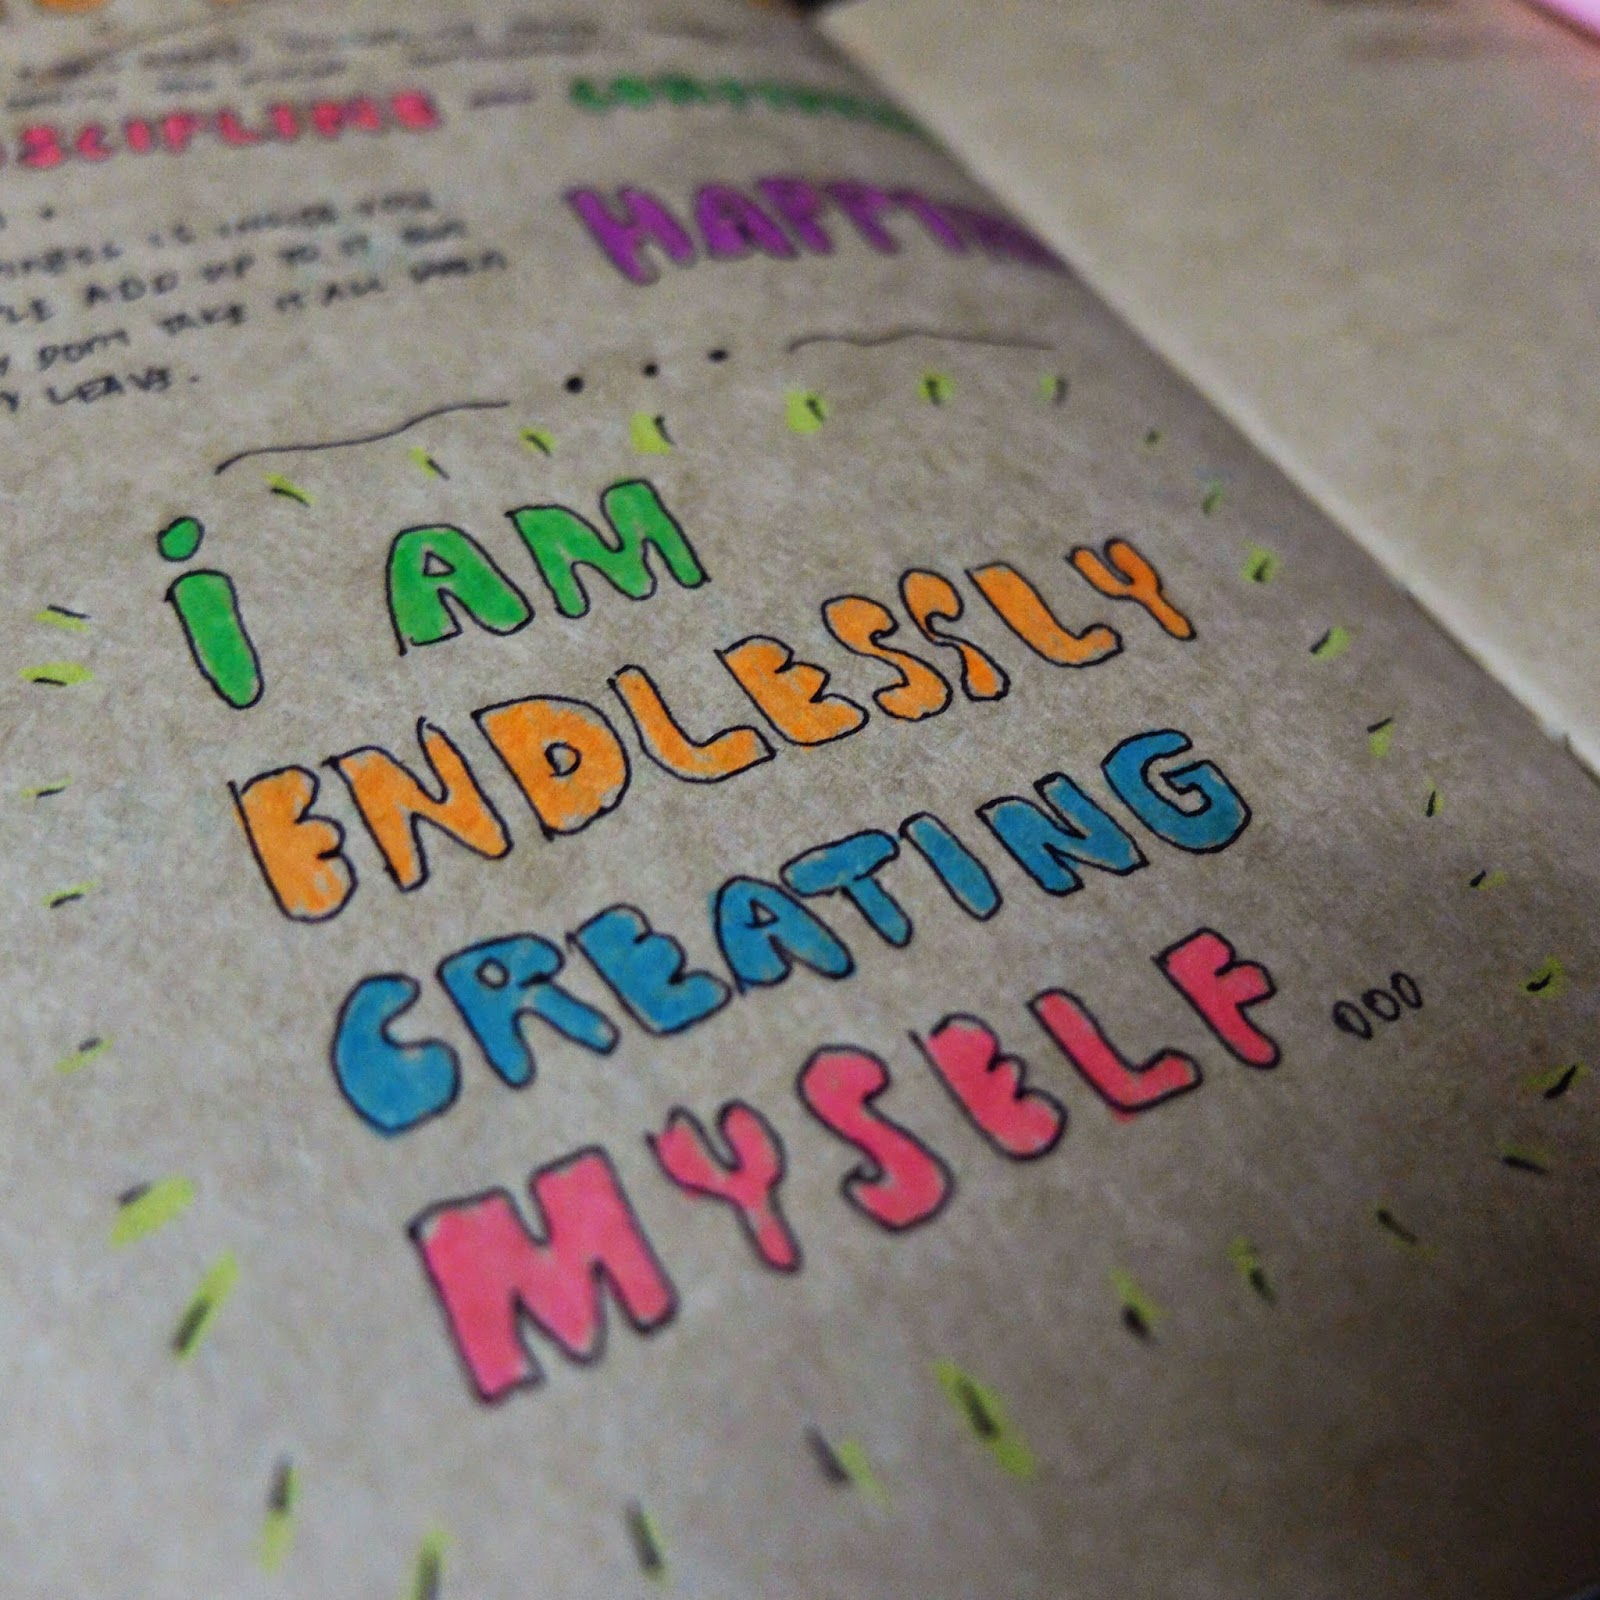 I am endlessly creating myself.